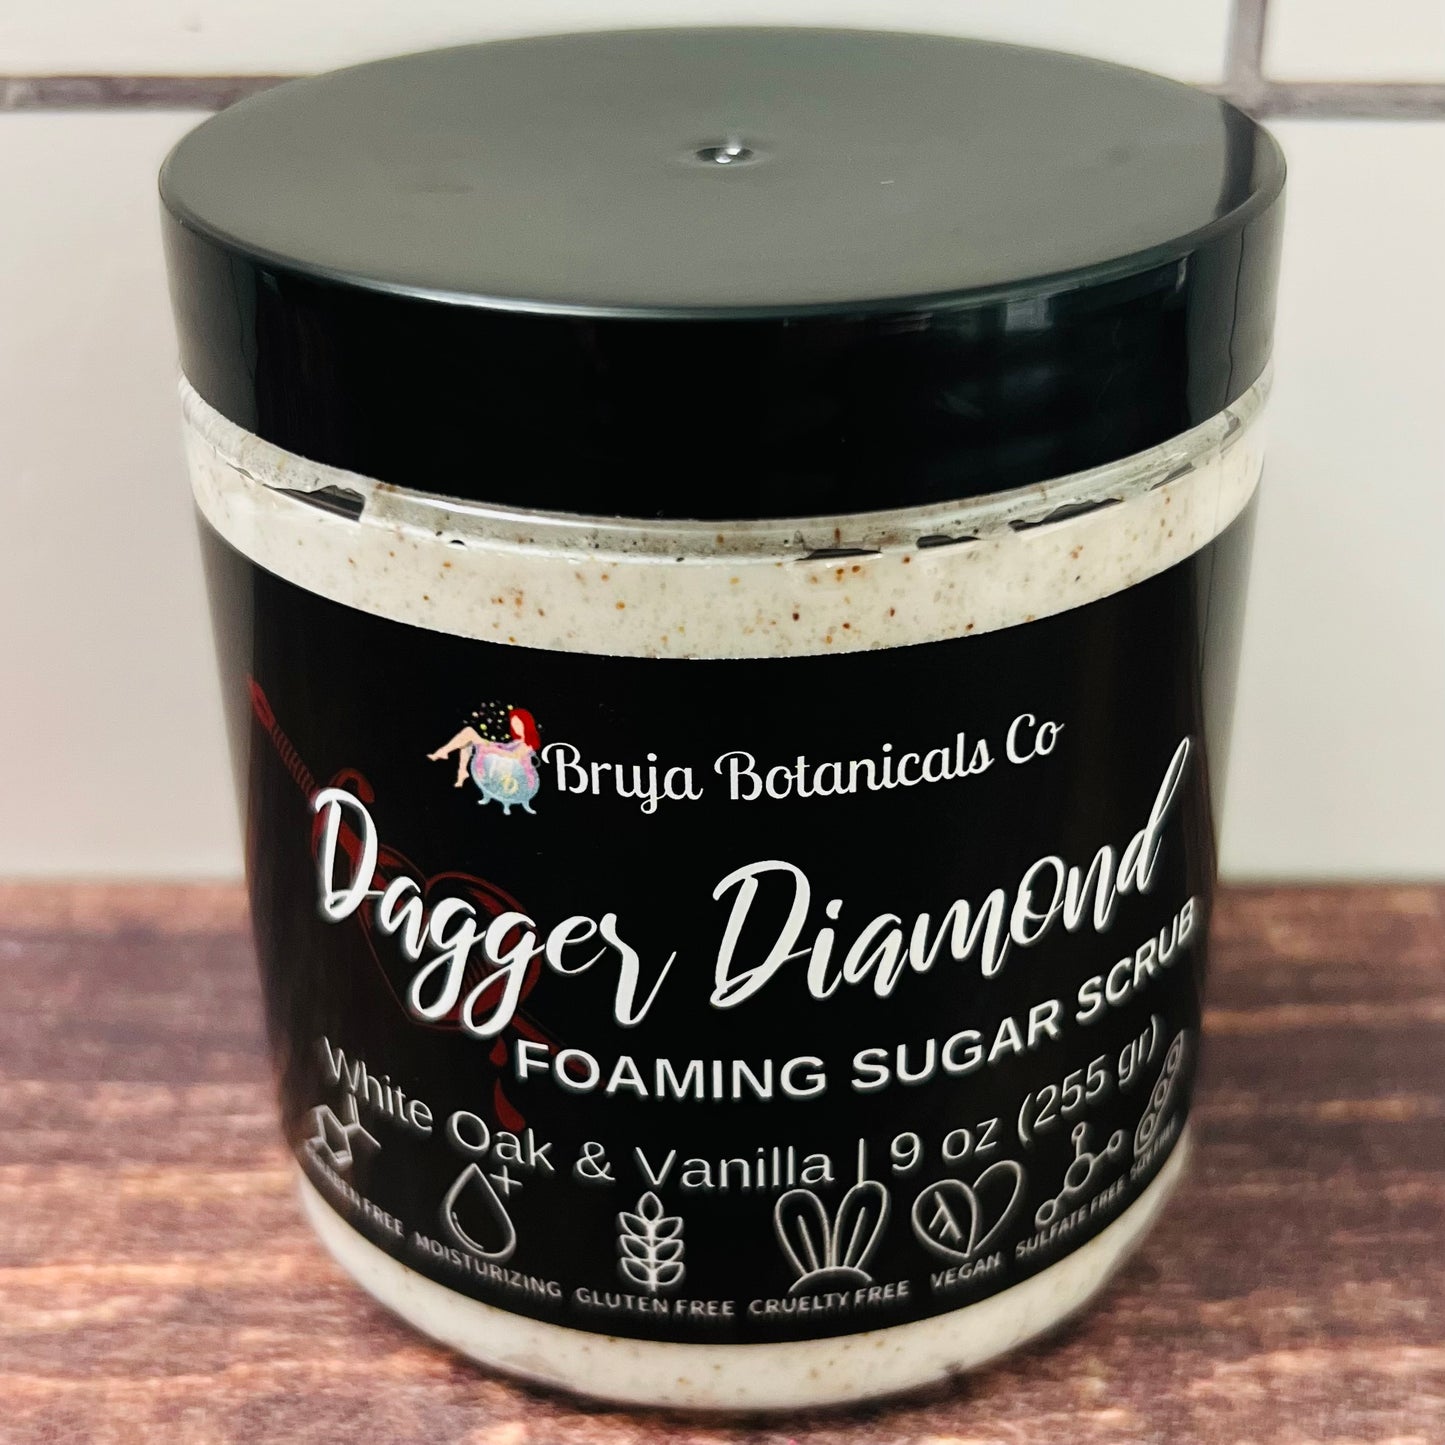 Dagger Diamond Foaming Sugar Scrub (TVD inspired)